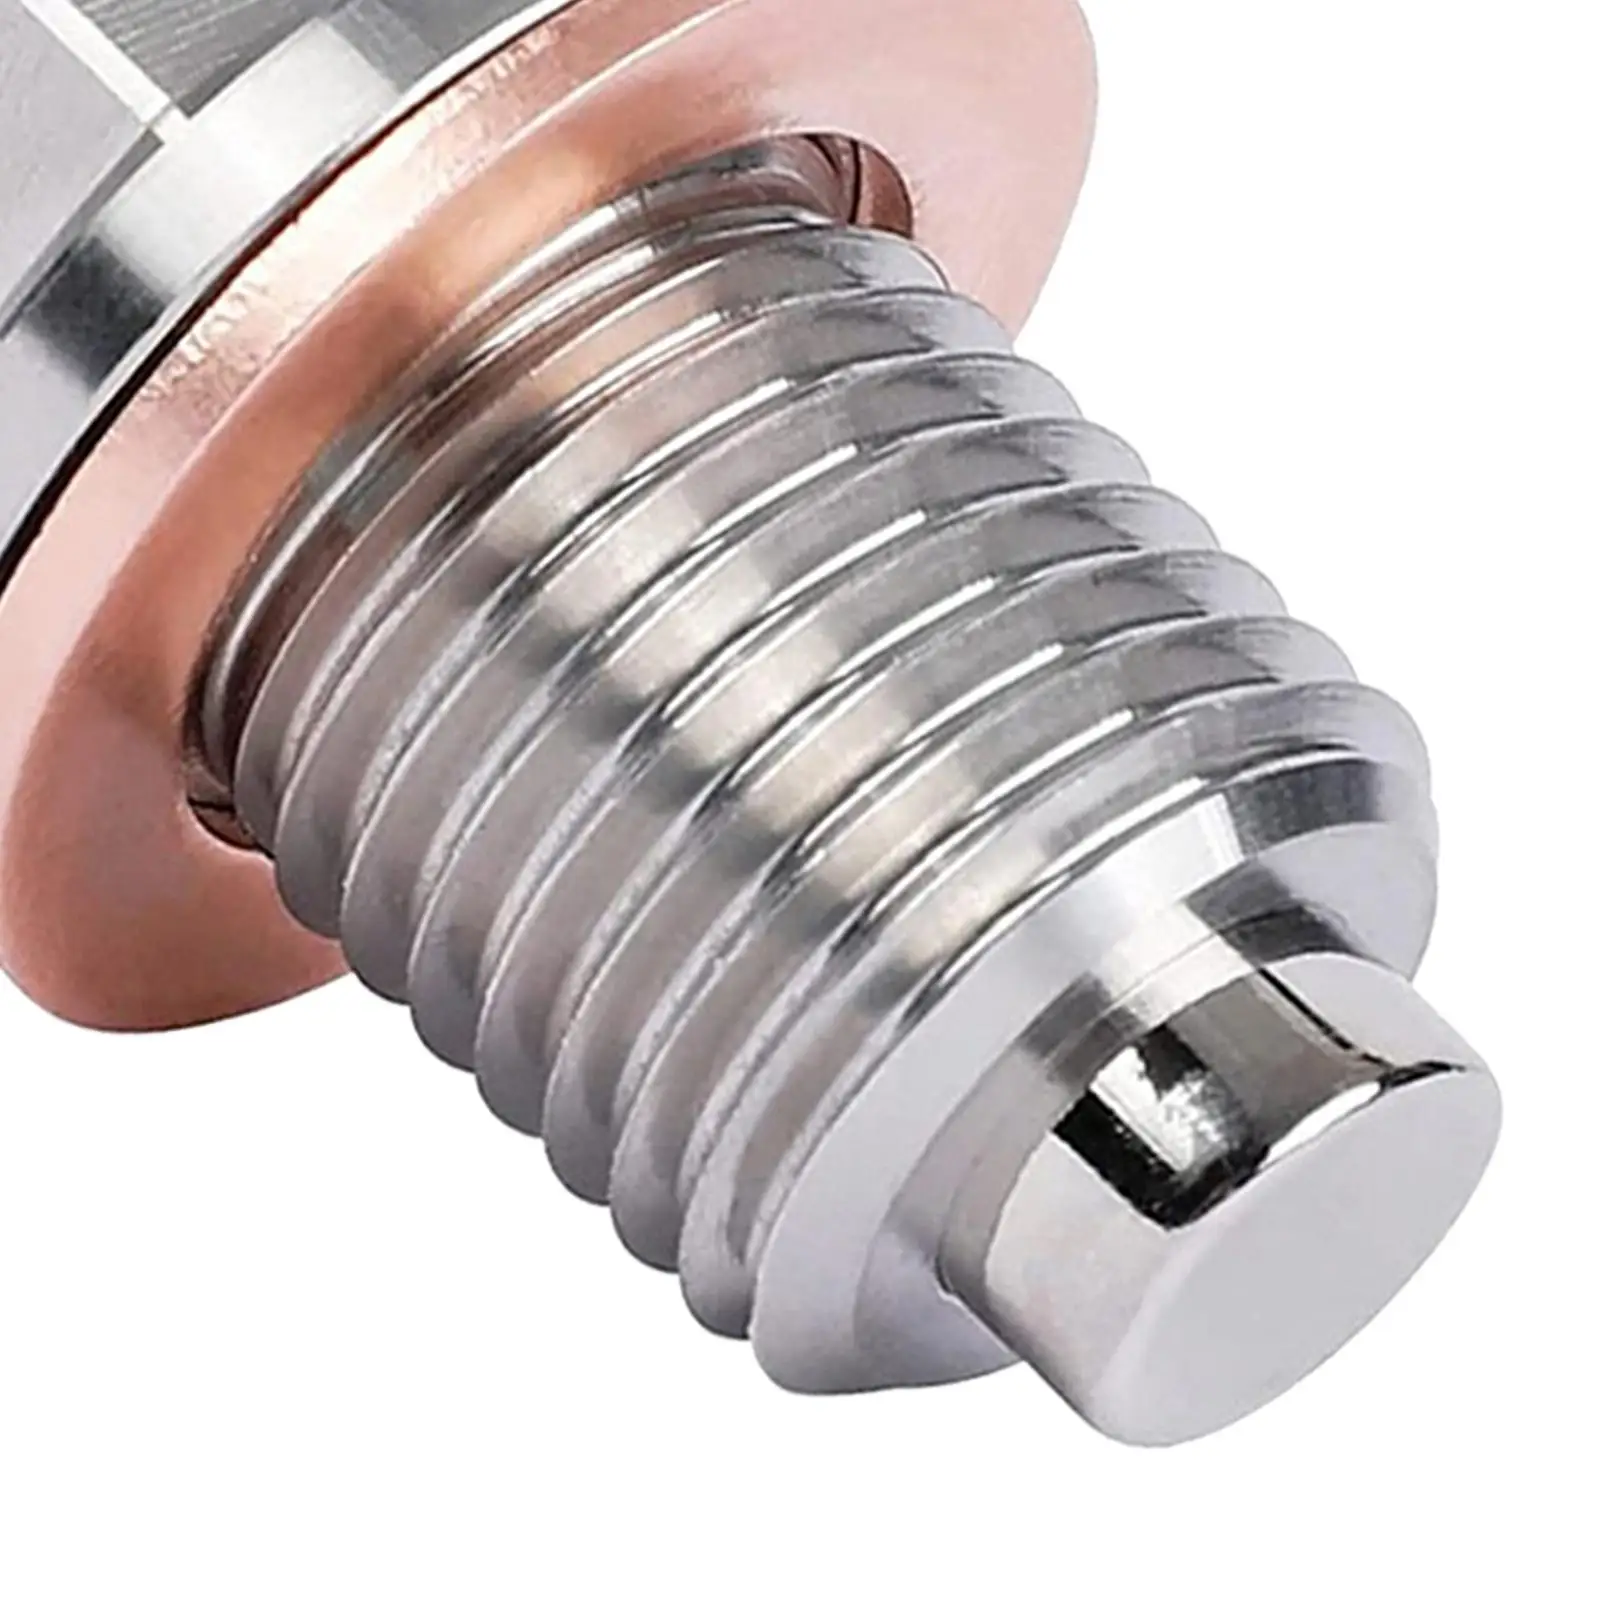 Oil Drain Plug Screw M12x1.5 Replace Parts Anti Leak Reusable Install Faster